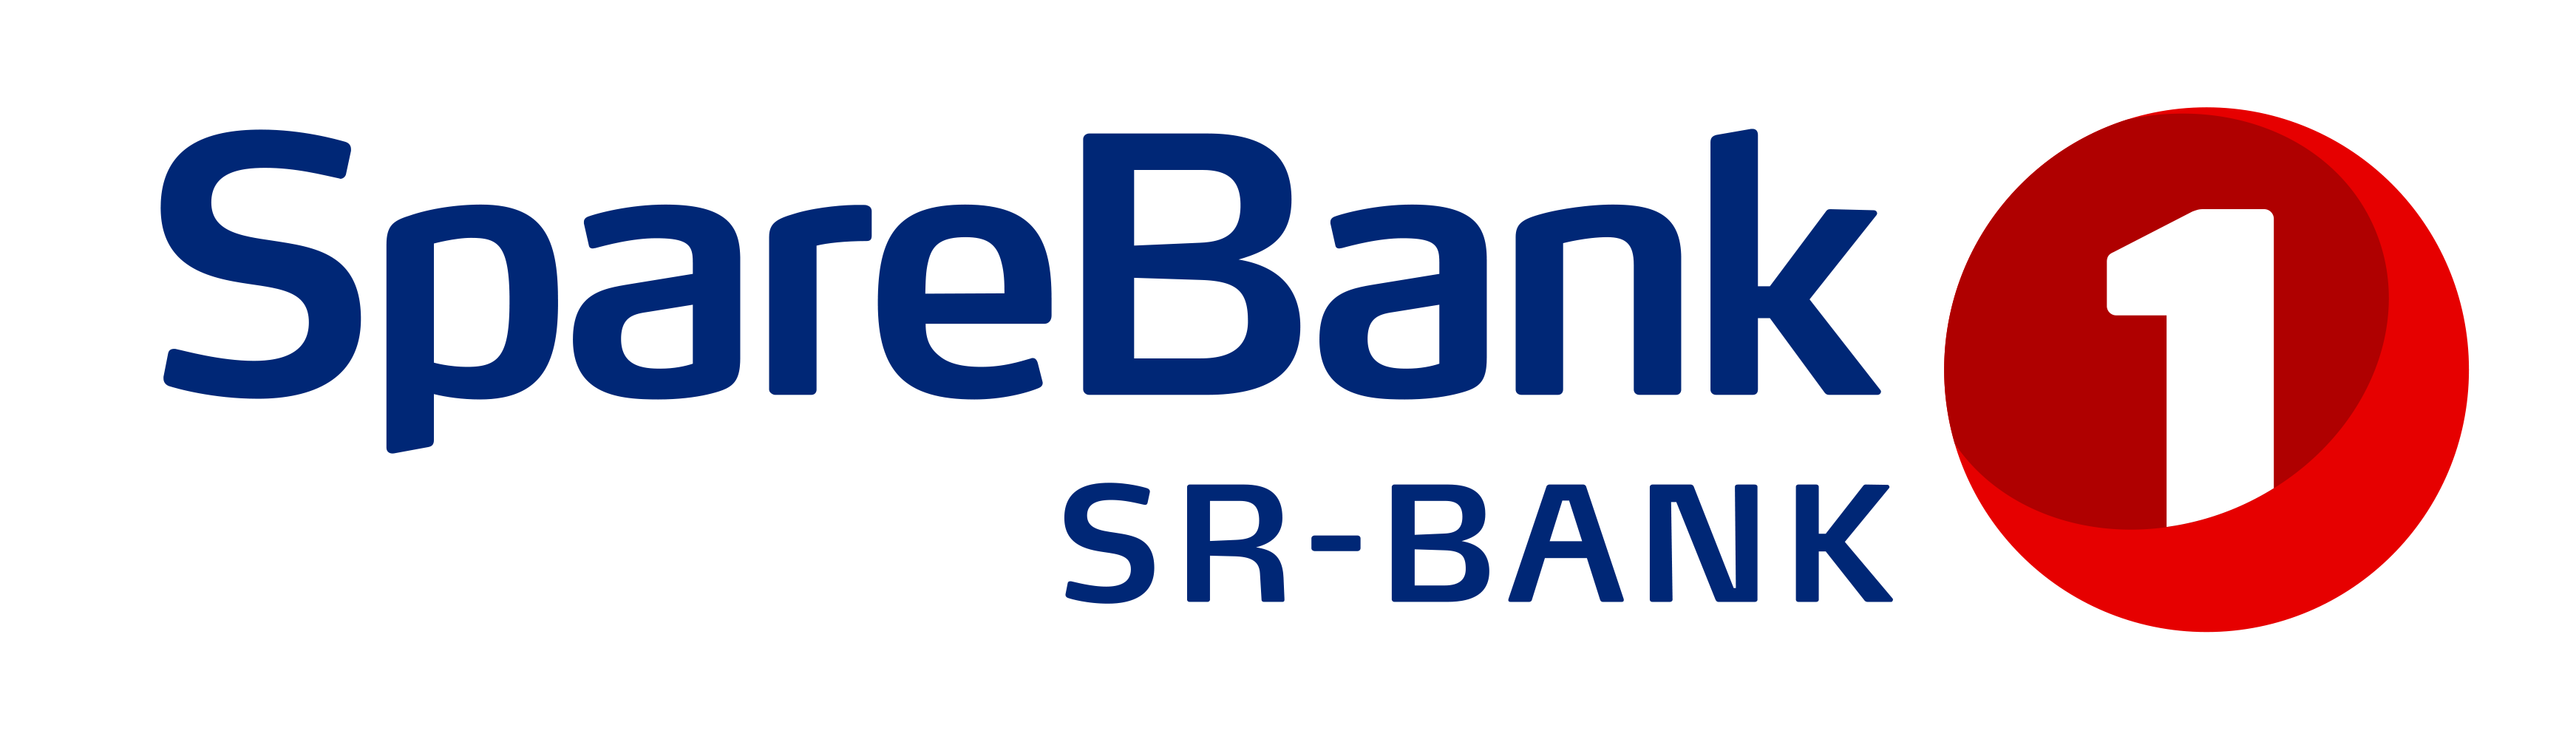 SpareBank 1 SR-Bank logo